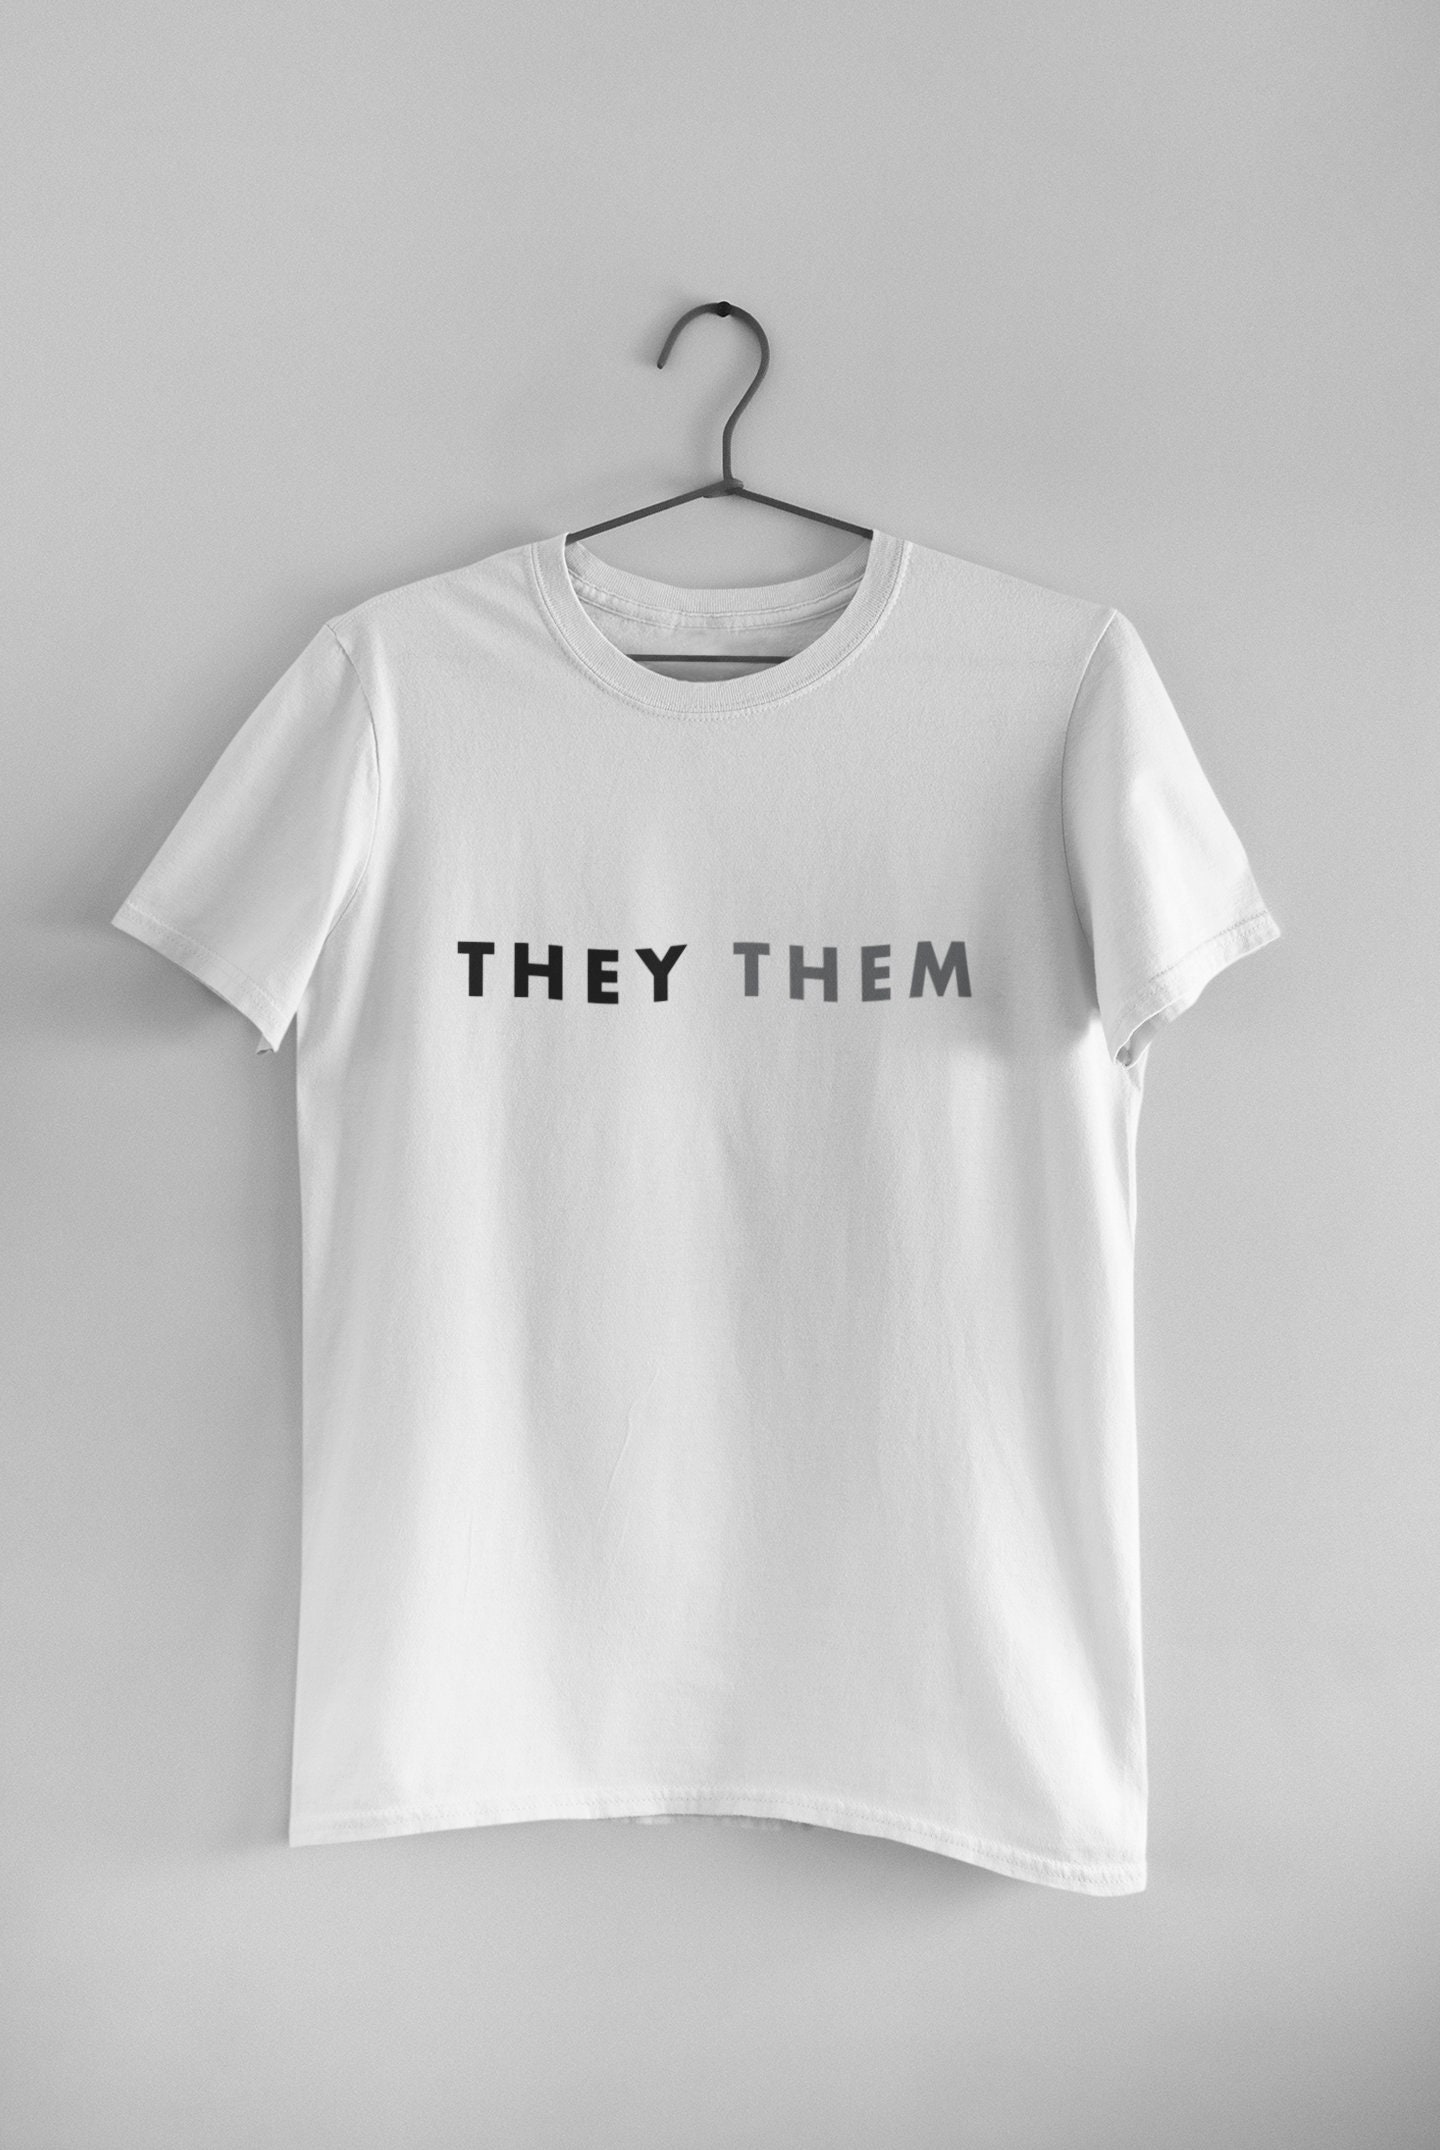 They and Them Pronouns T-shirt Unisex Pronouns Tee Trans - Etsy UK